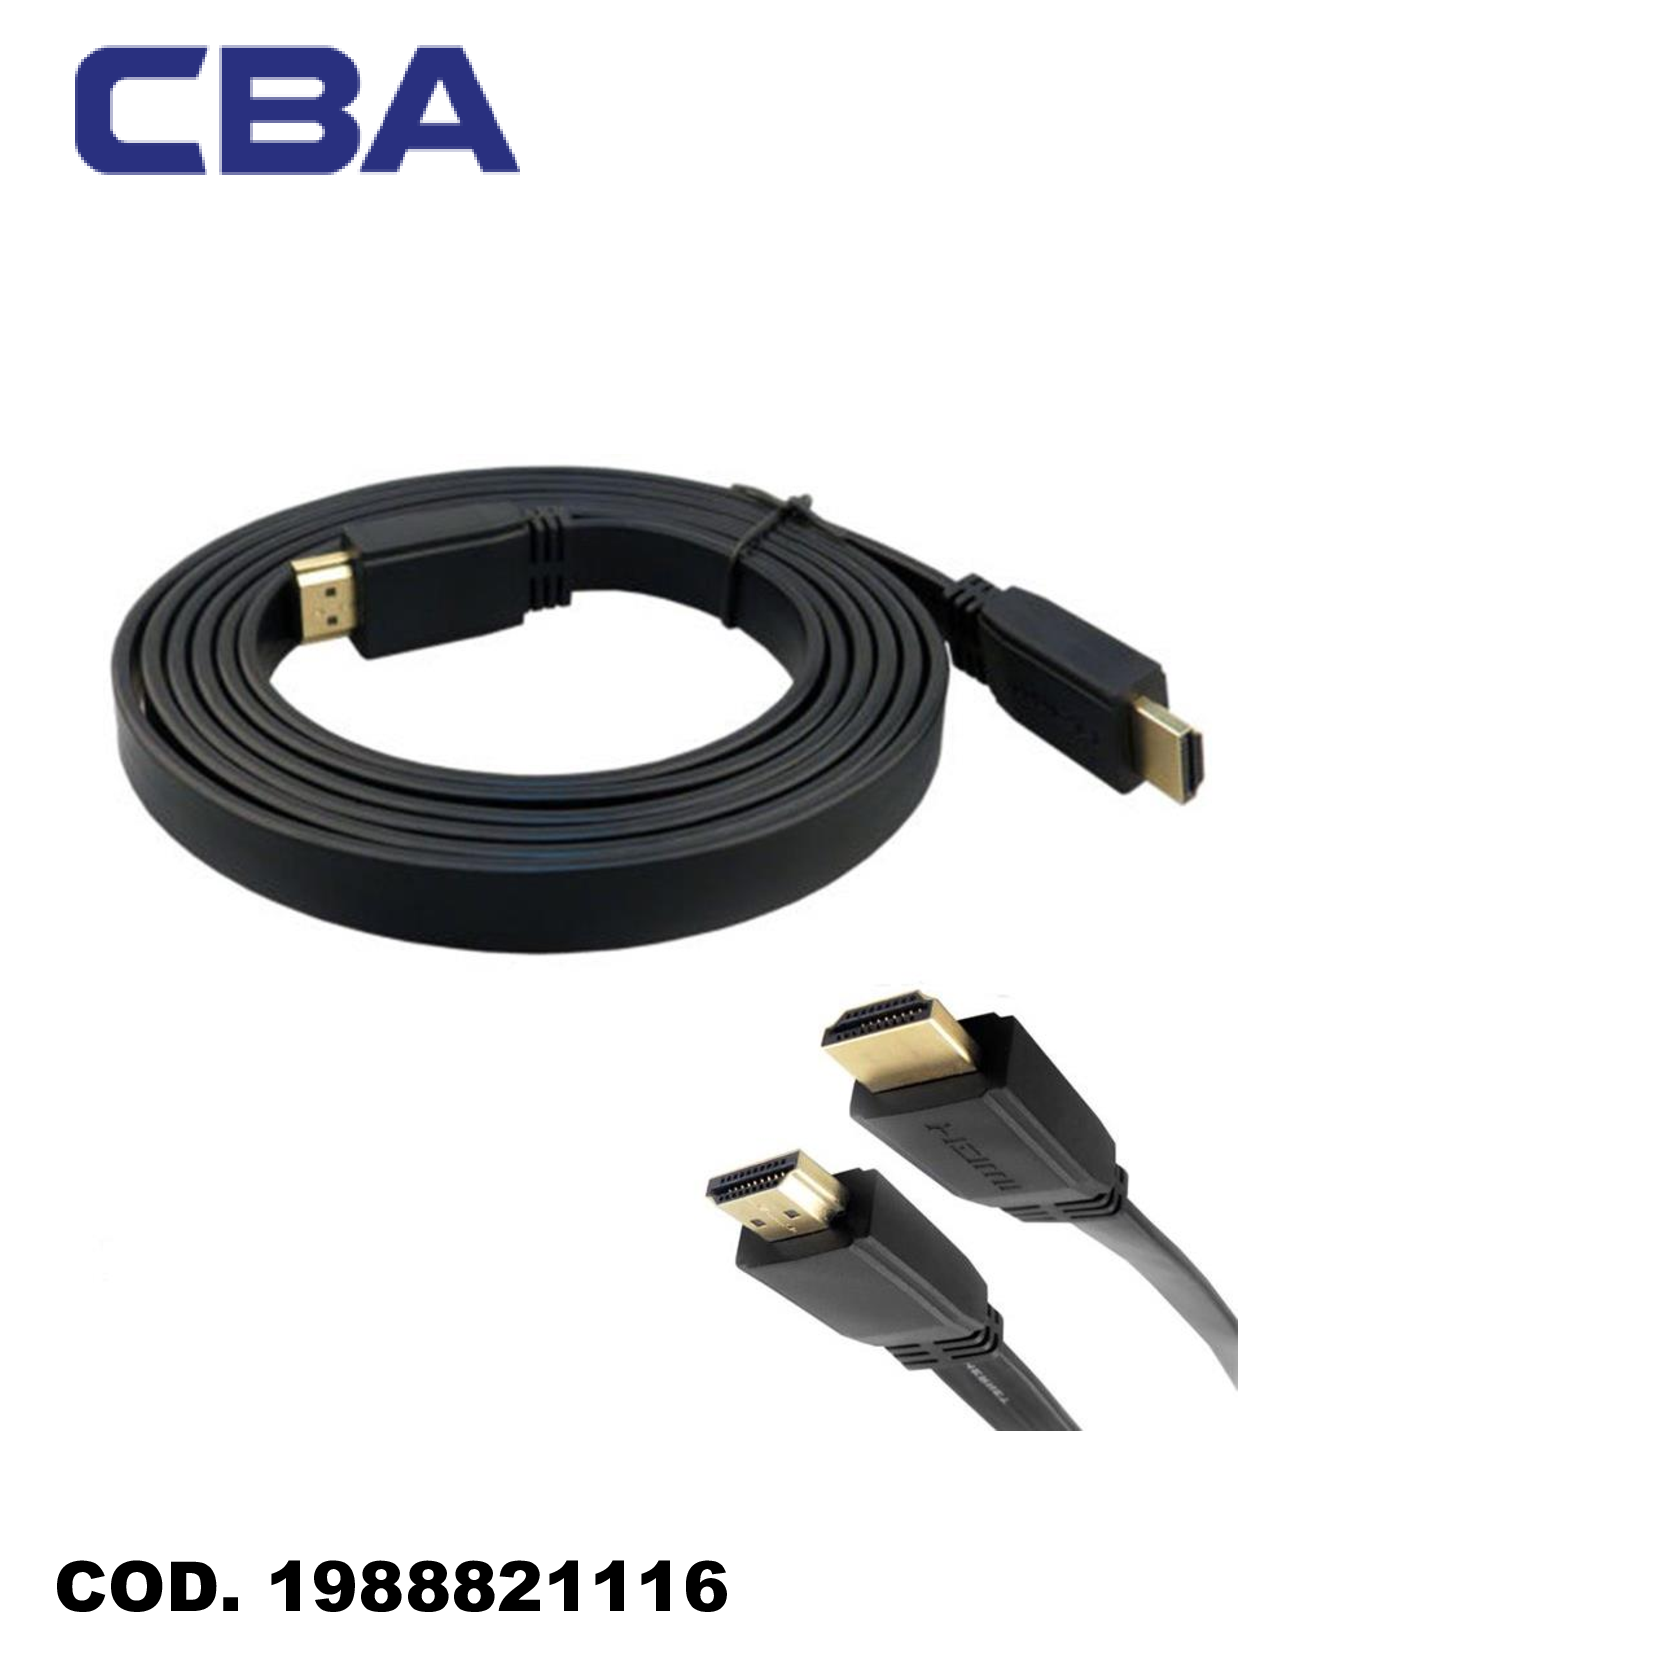 Cable Hdmi 3m Cba - Celulares Ecuador